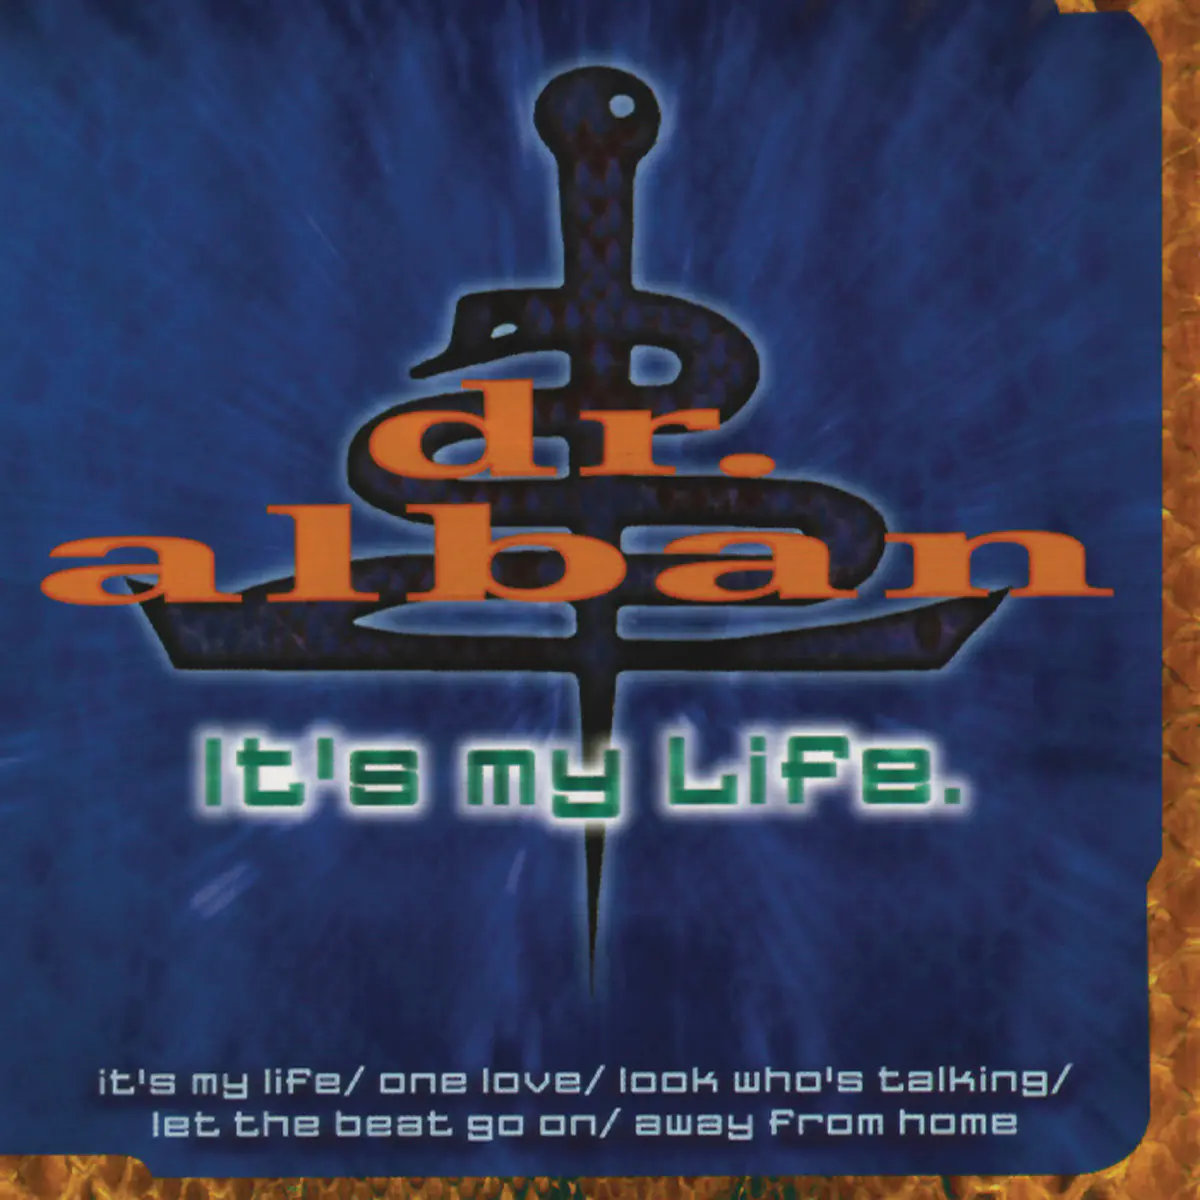 It S My Life Lyrics In English It S My Life It S My Life Song Lyrics In English Free Online On Gaana Com